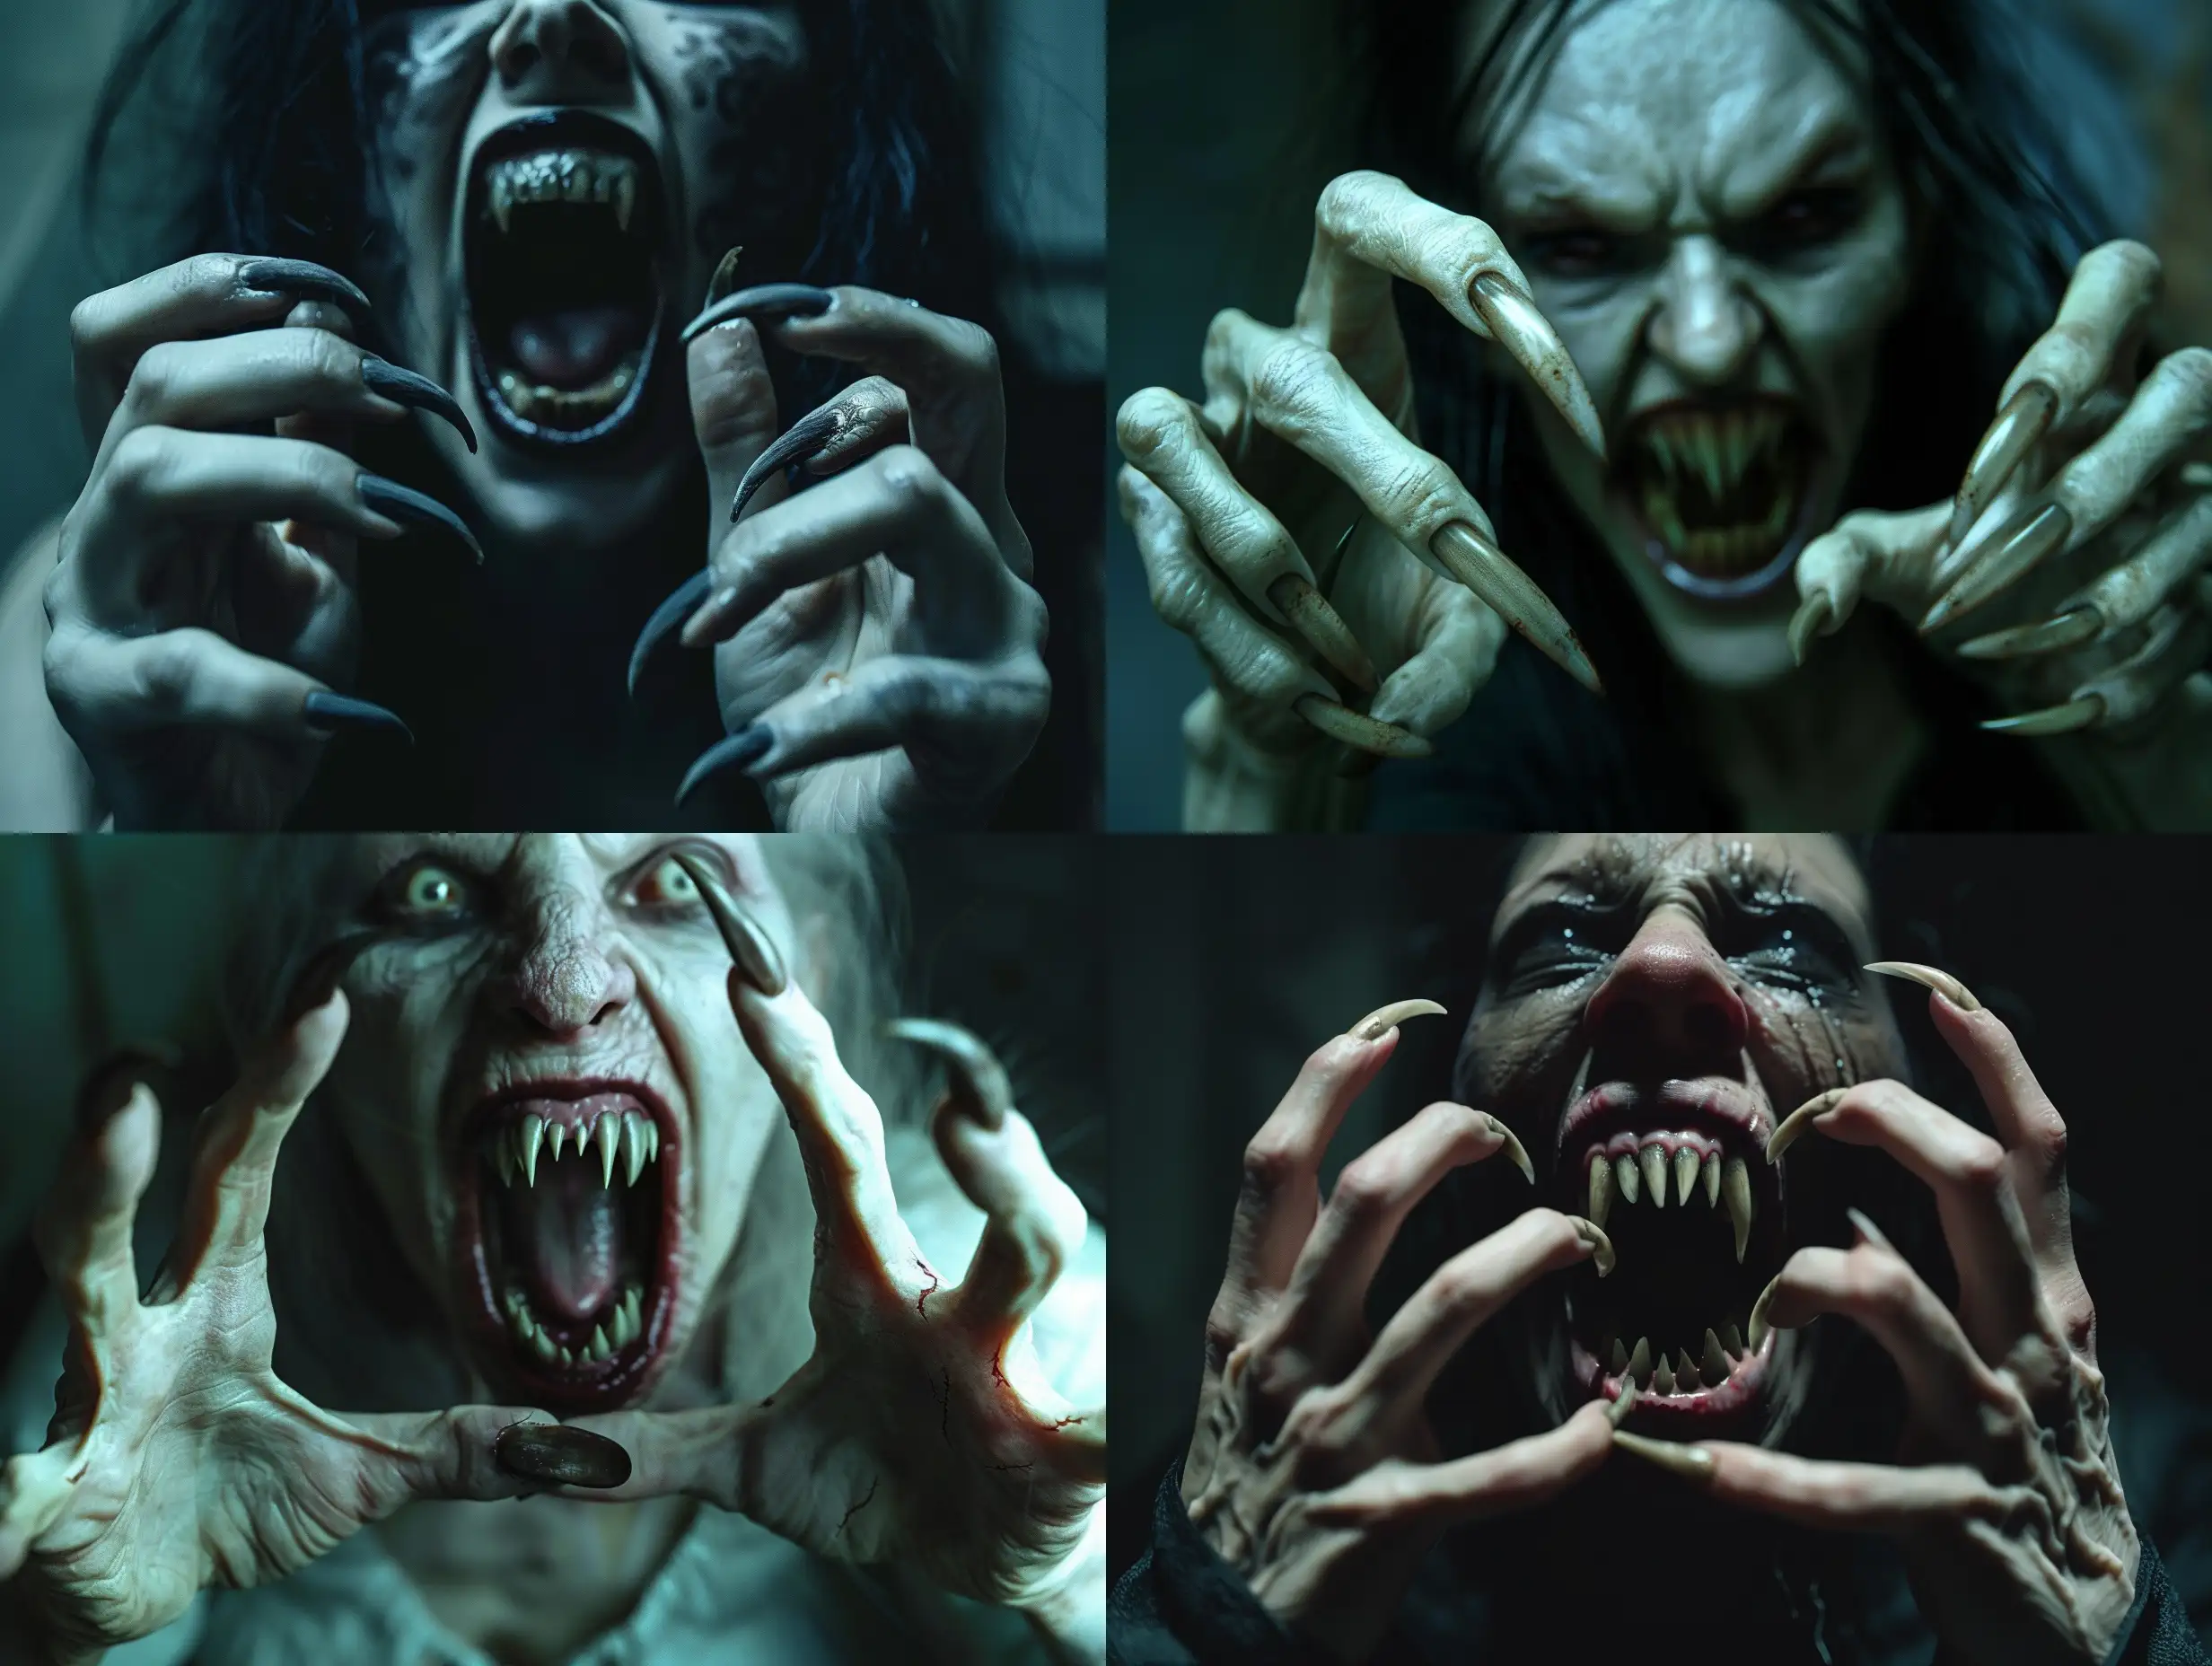 Photorealistic-Monstrous-Vampire-Woman-in-Dark-Room